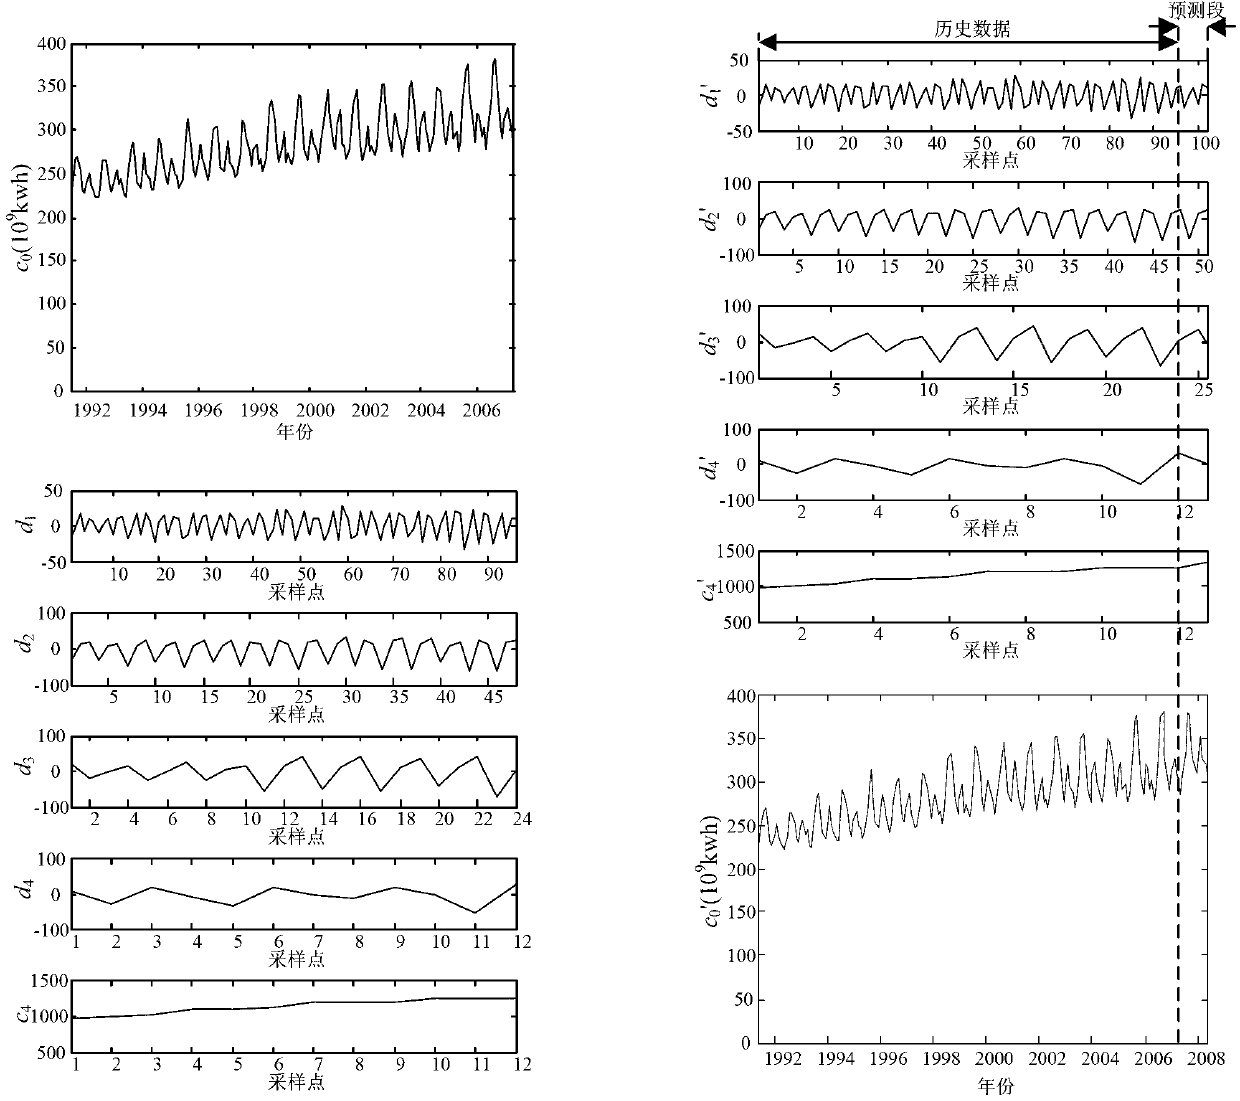 Monthly electrical load computer forecasting method based on wavelet analysis